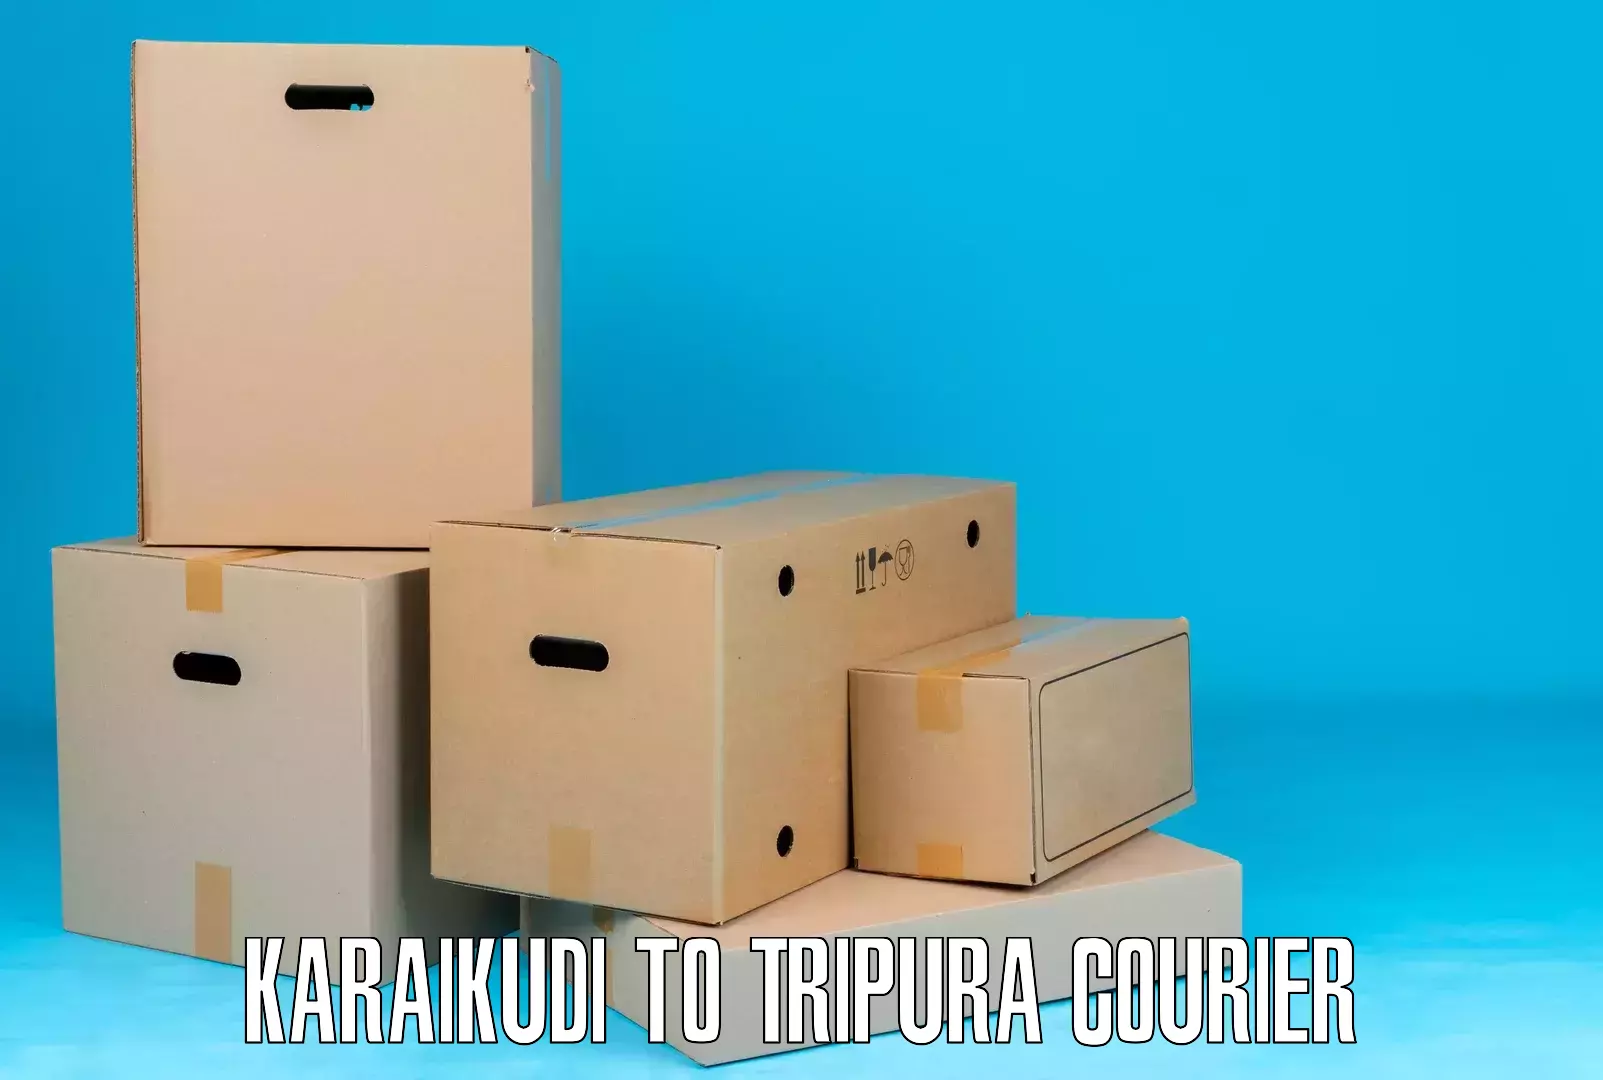 User-friendly courier app Karaikudi to Tripura